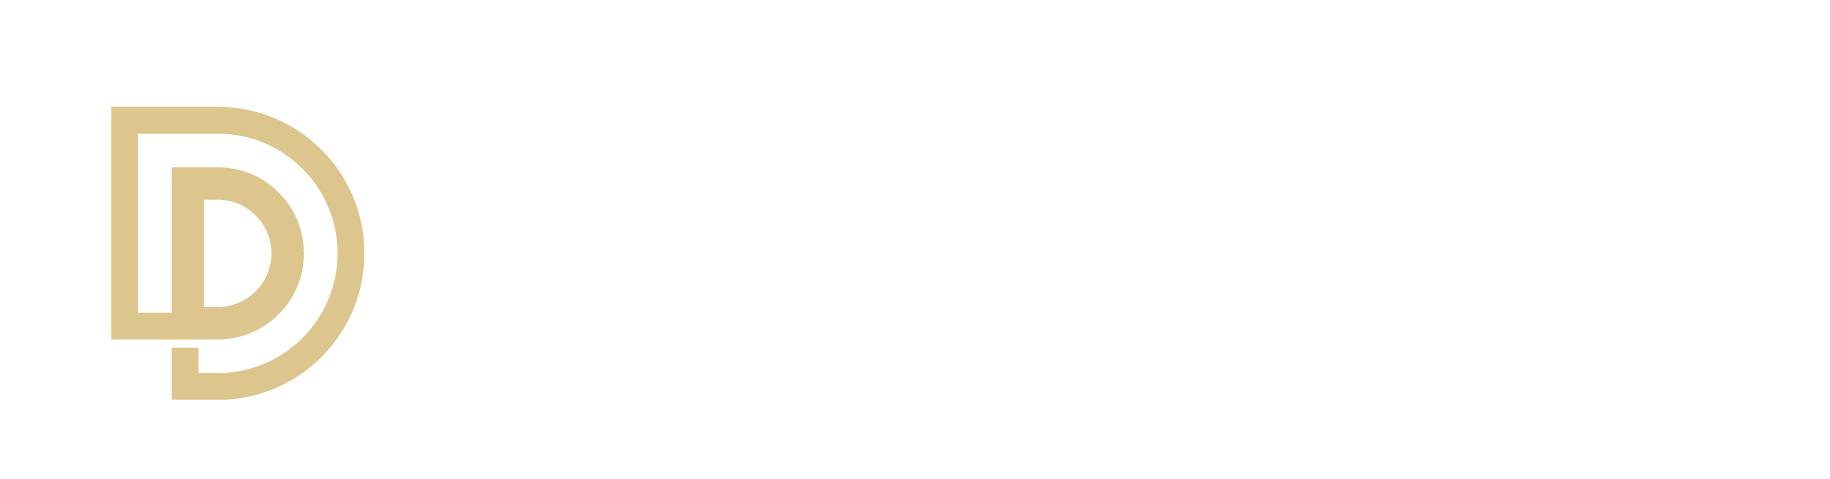 dean and draper logo